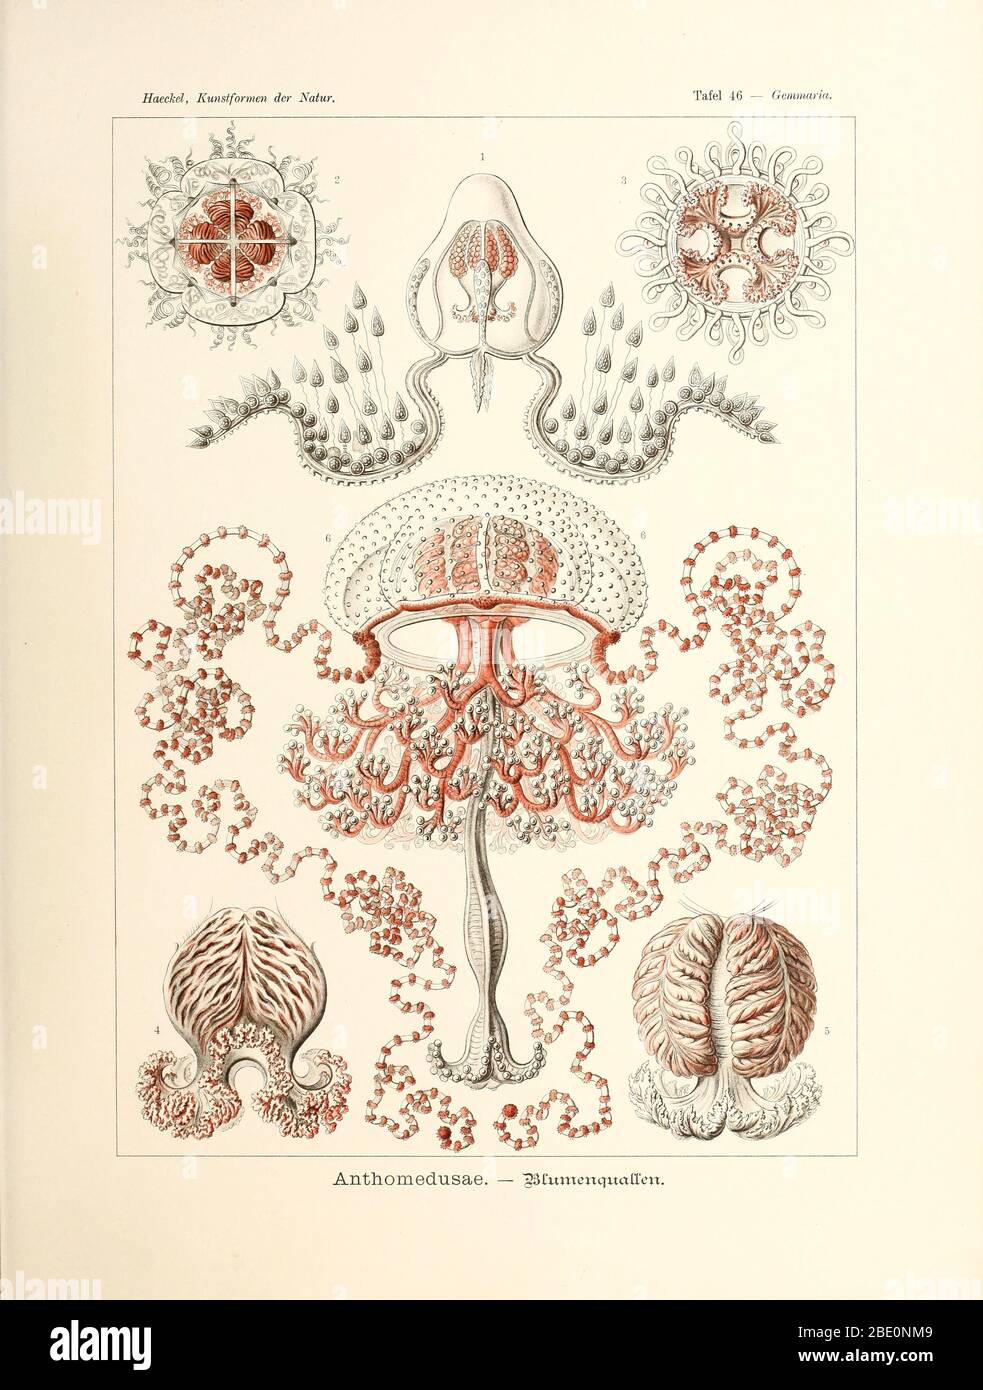 Antomedusa (Antomedusae) de la Kunstformen der Natur de Ernst Haeckel, 1904 Foto de stock